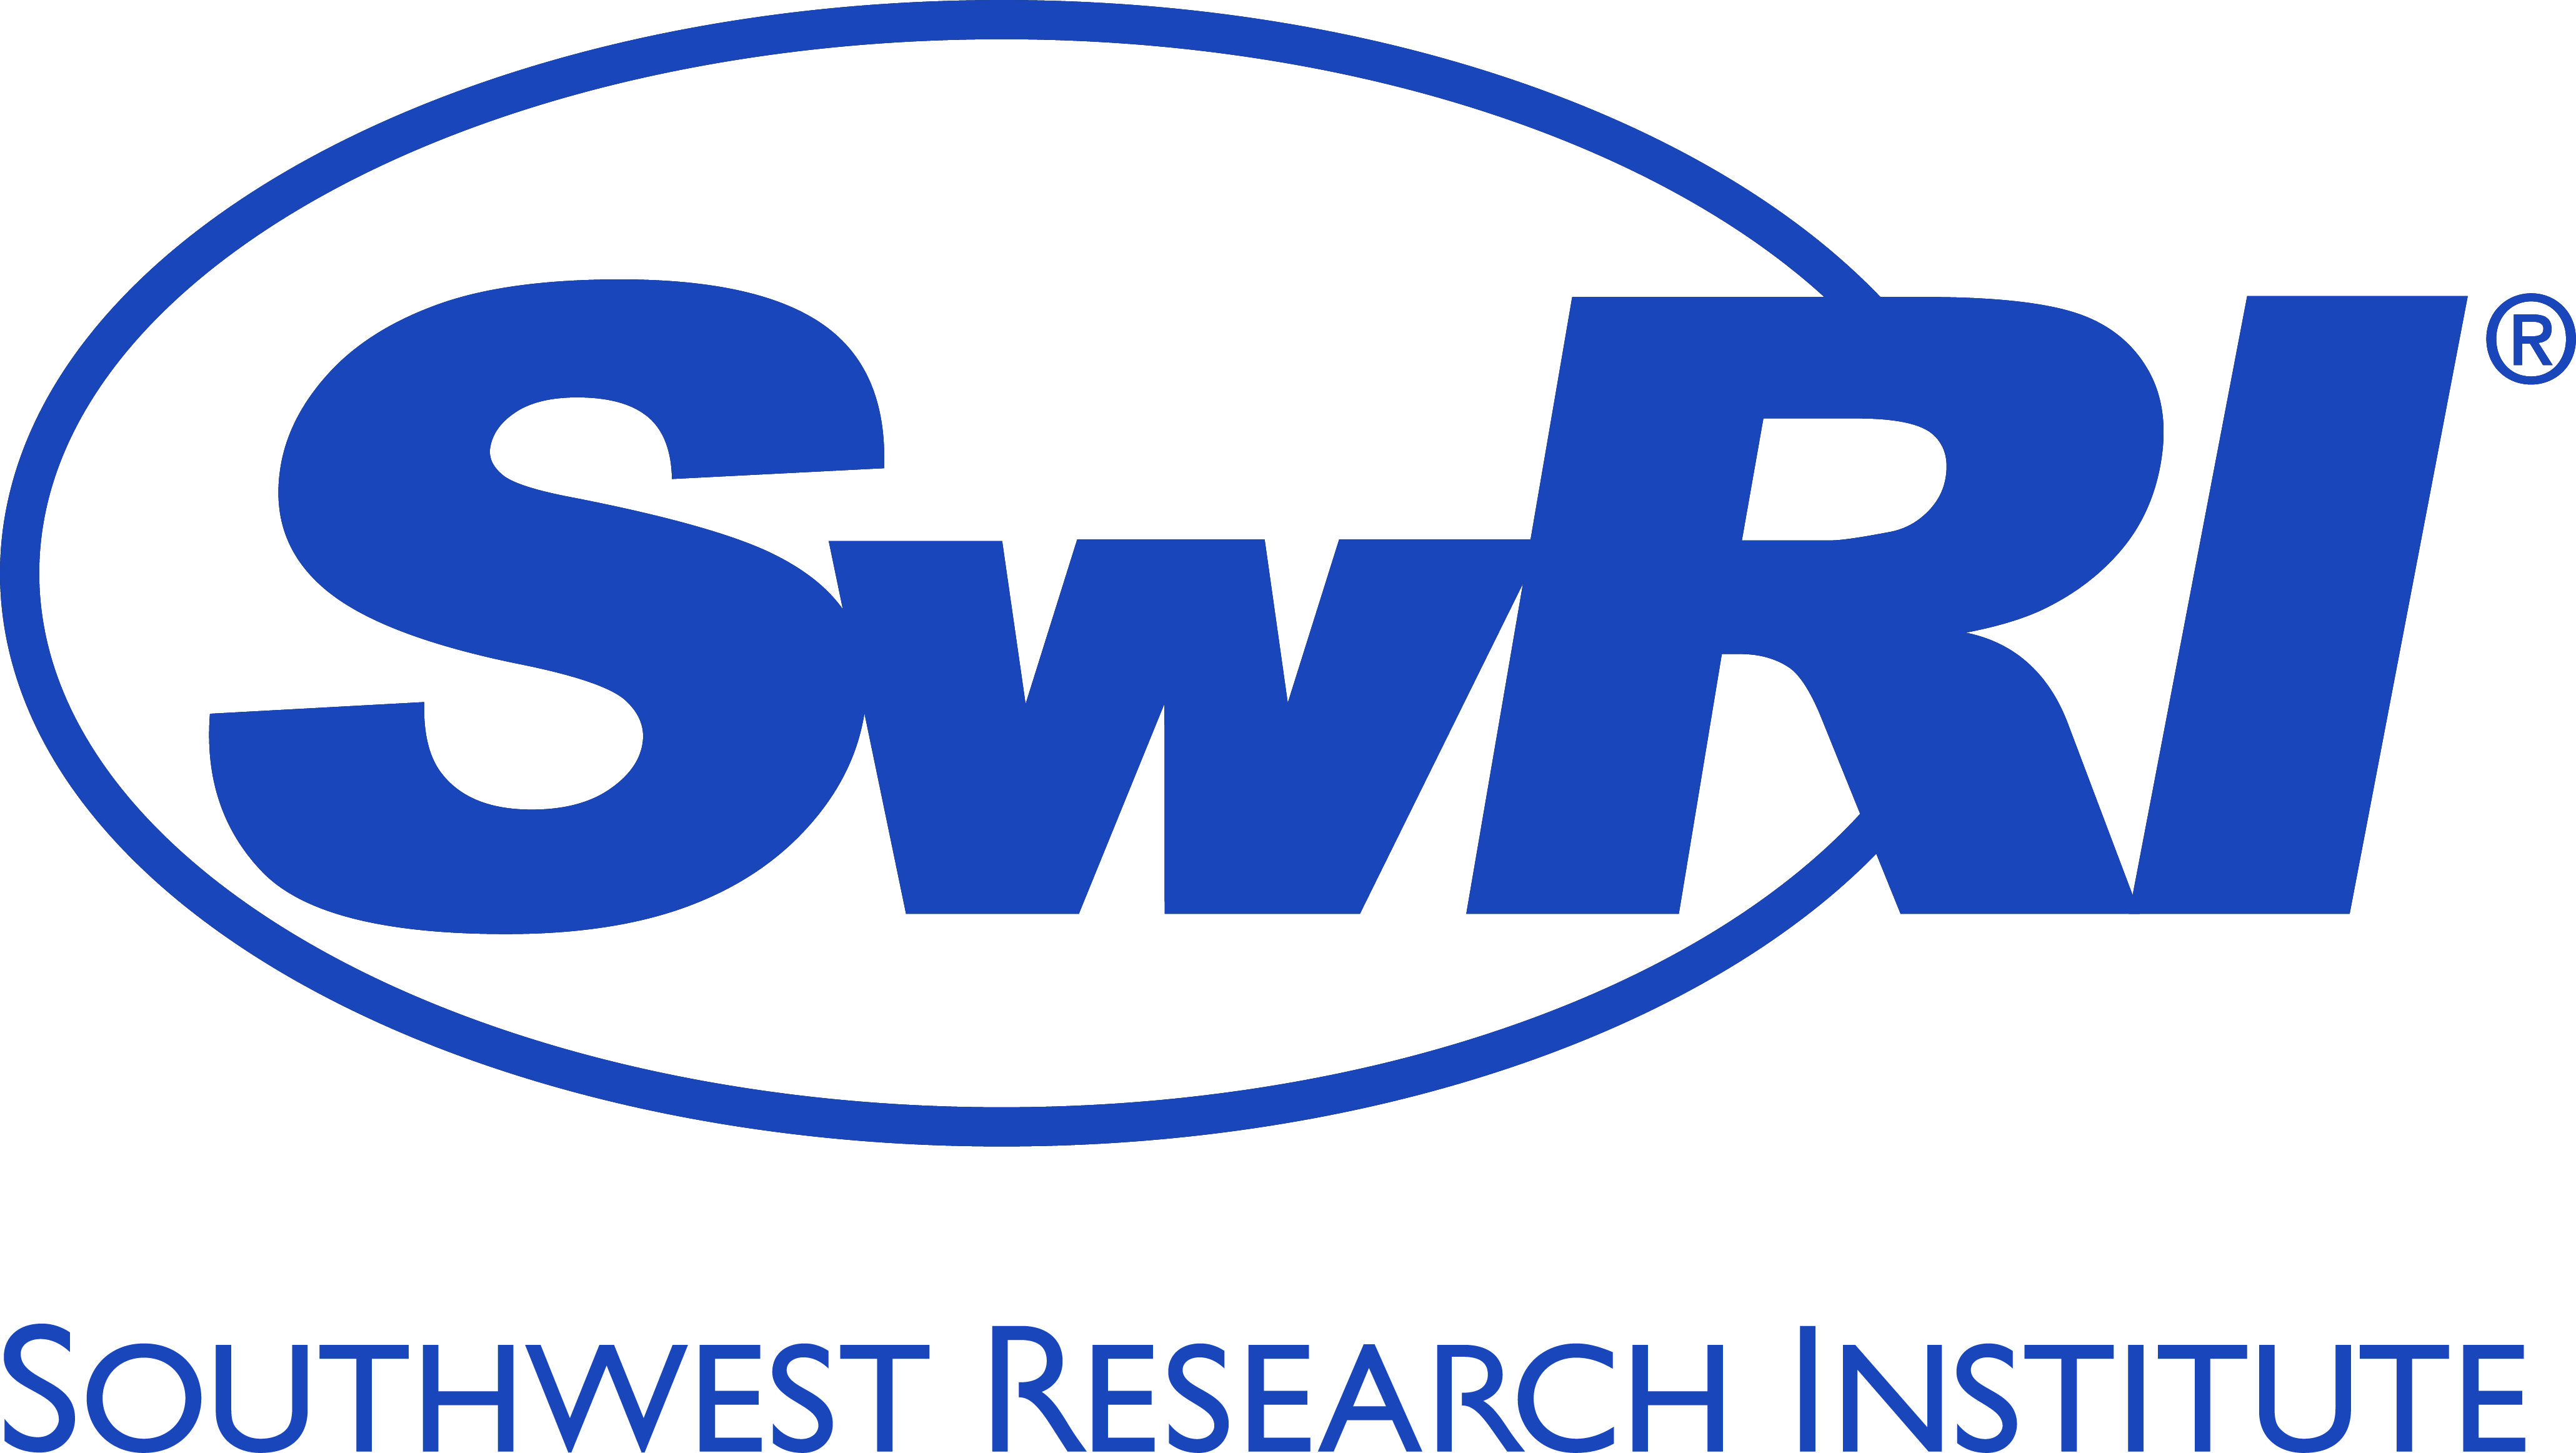 Southwest Research Institute